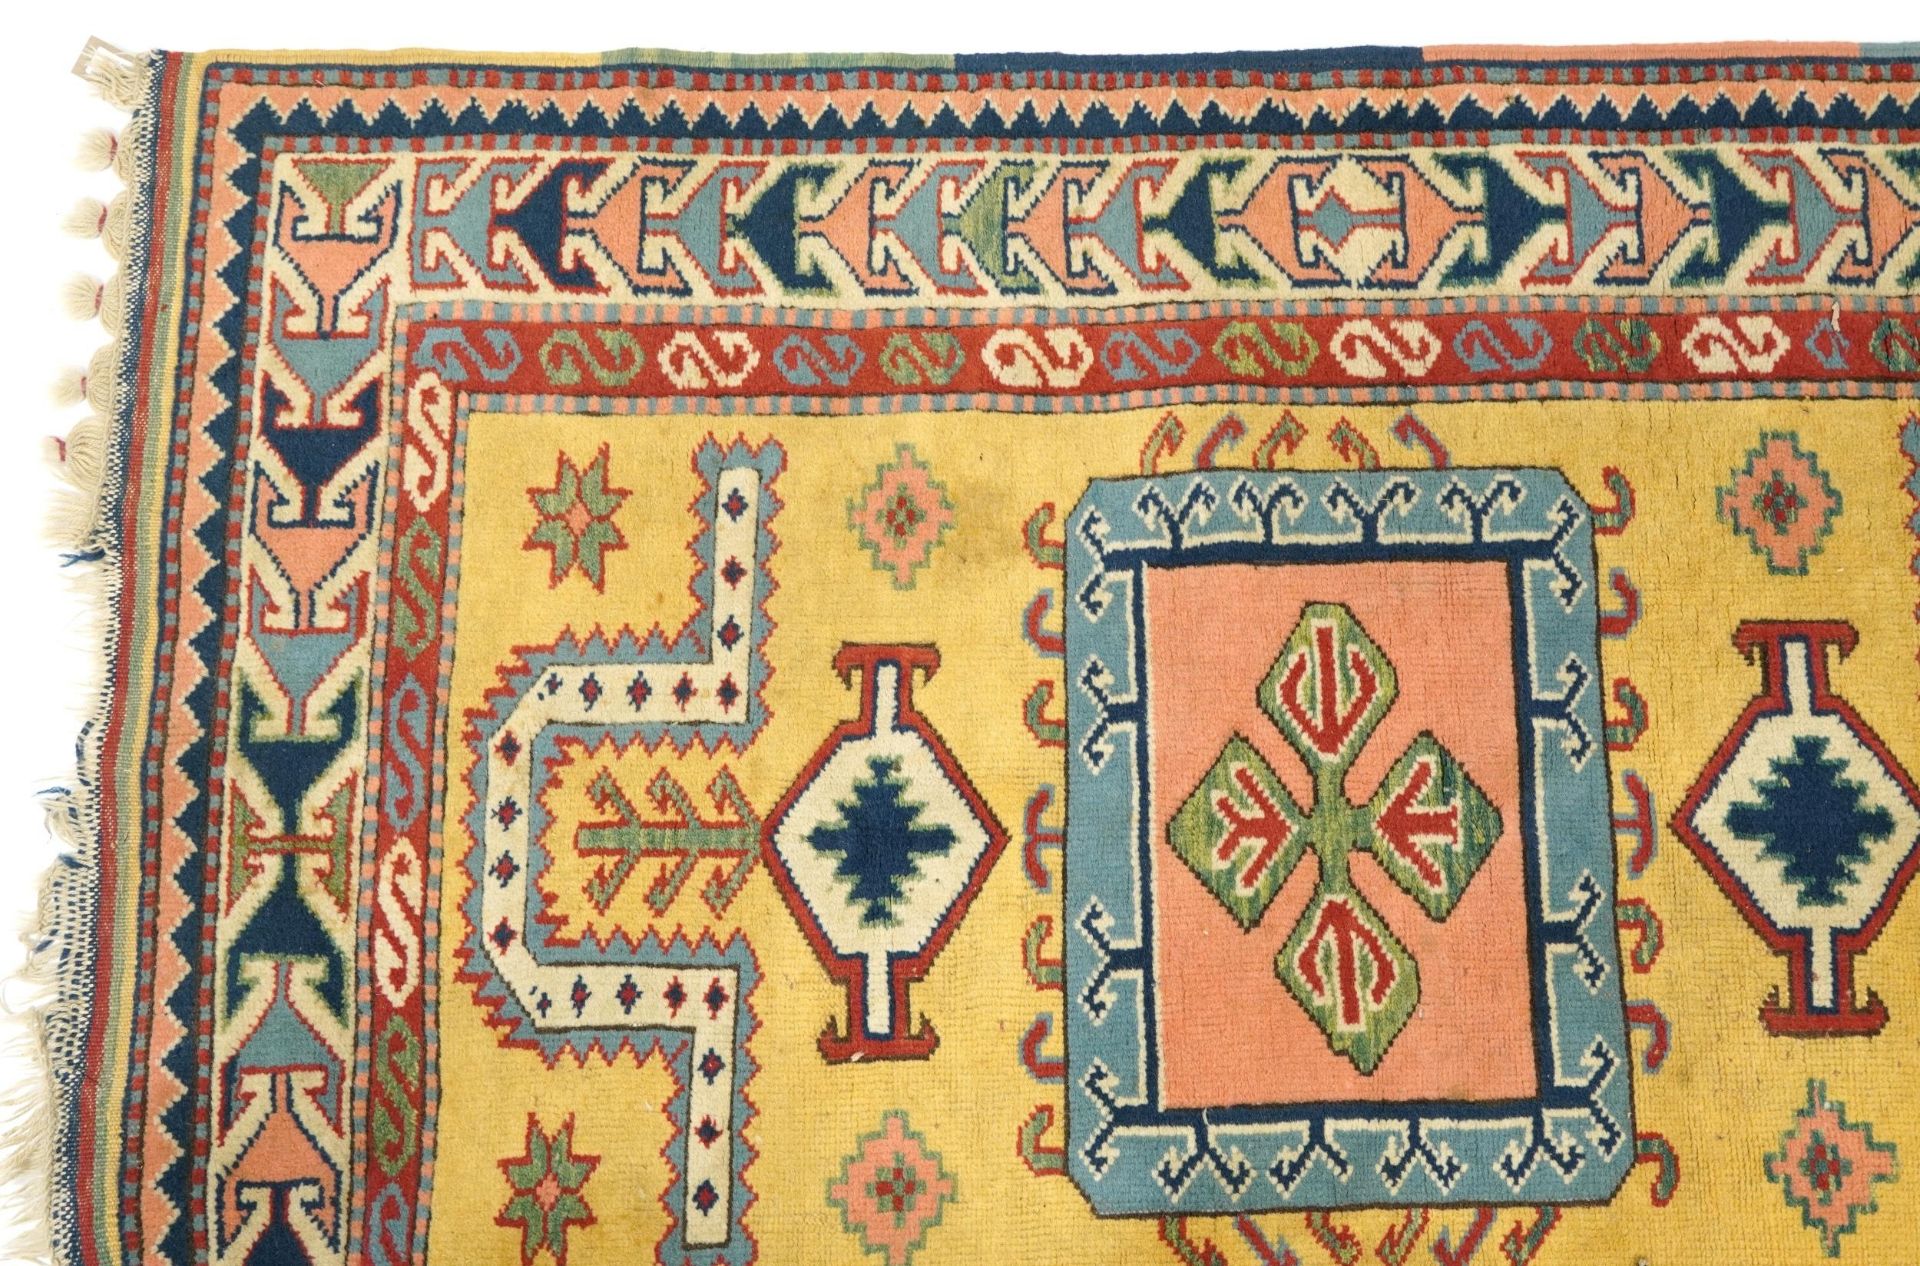 Rectangular Turkish kilim rug having and allover traditional design, 185cm x 125cm - Image 2 of 7